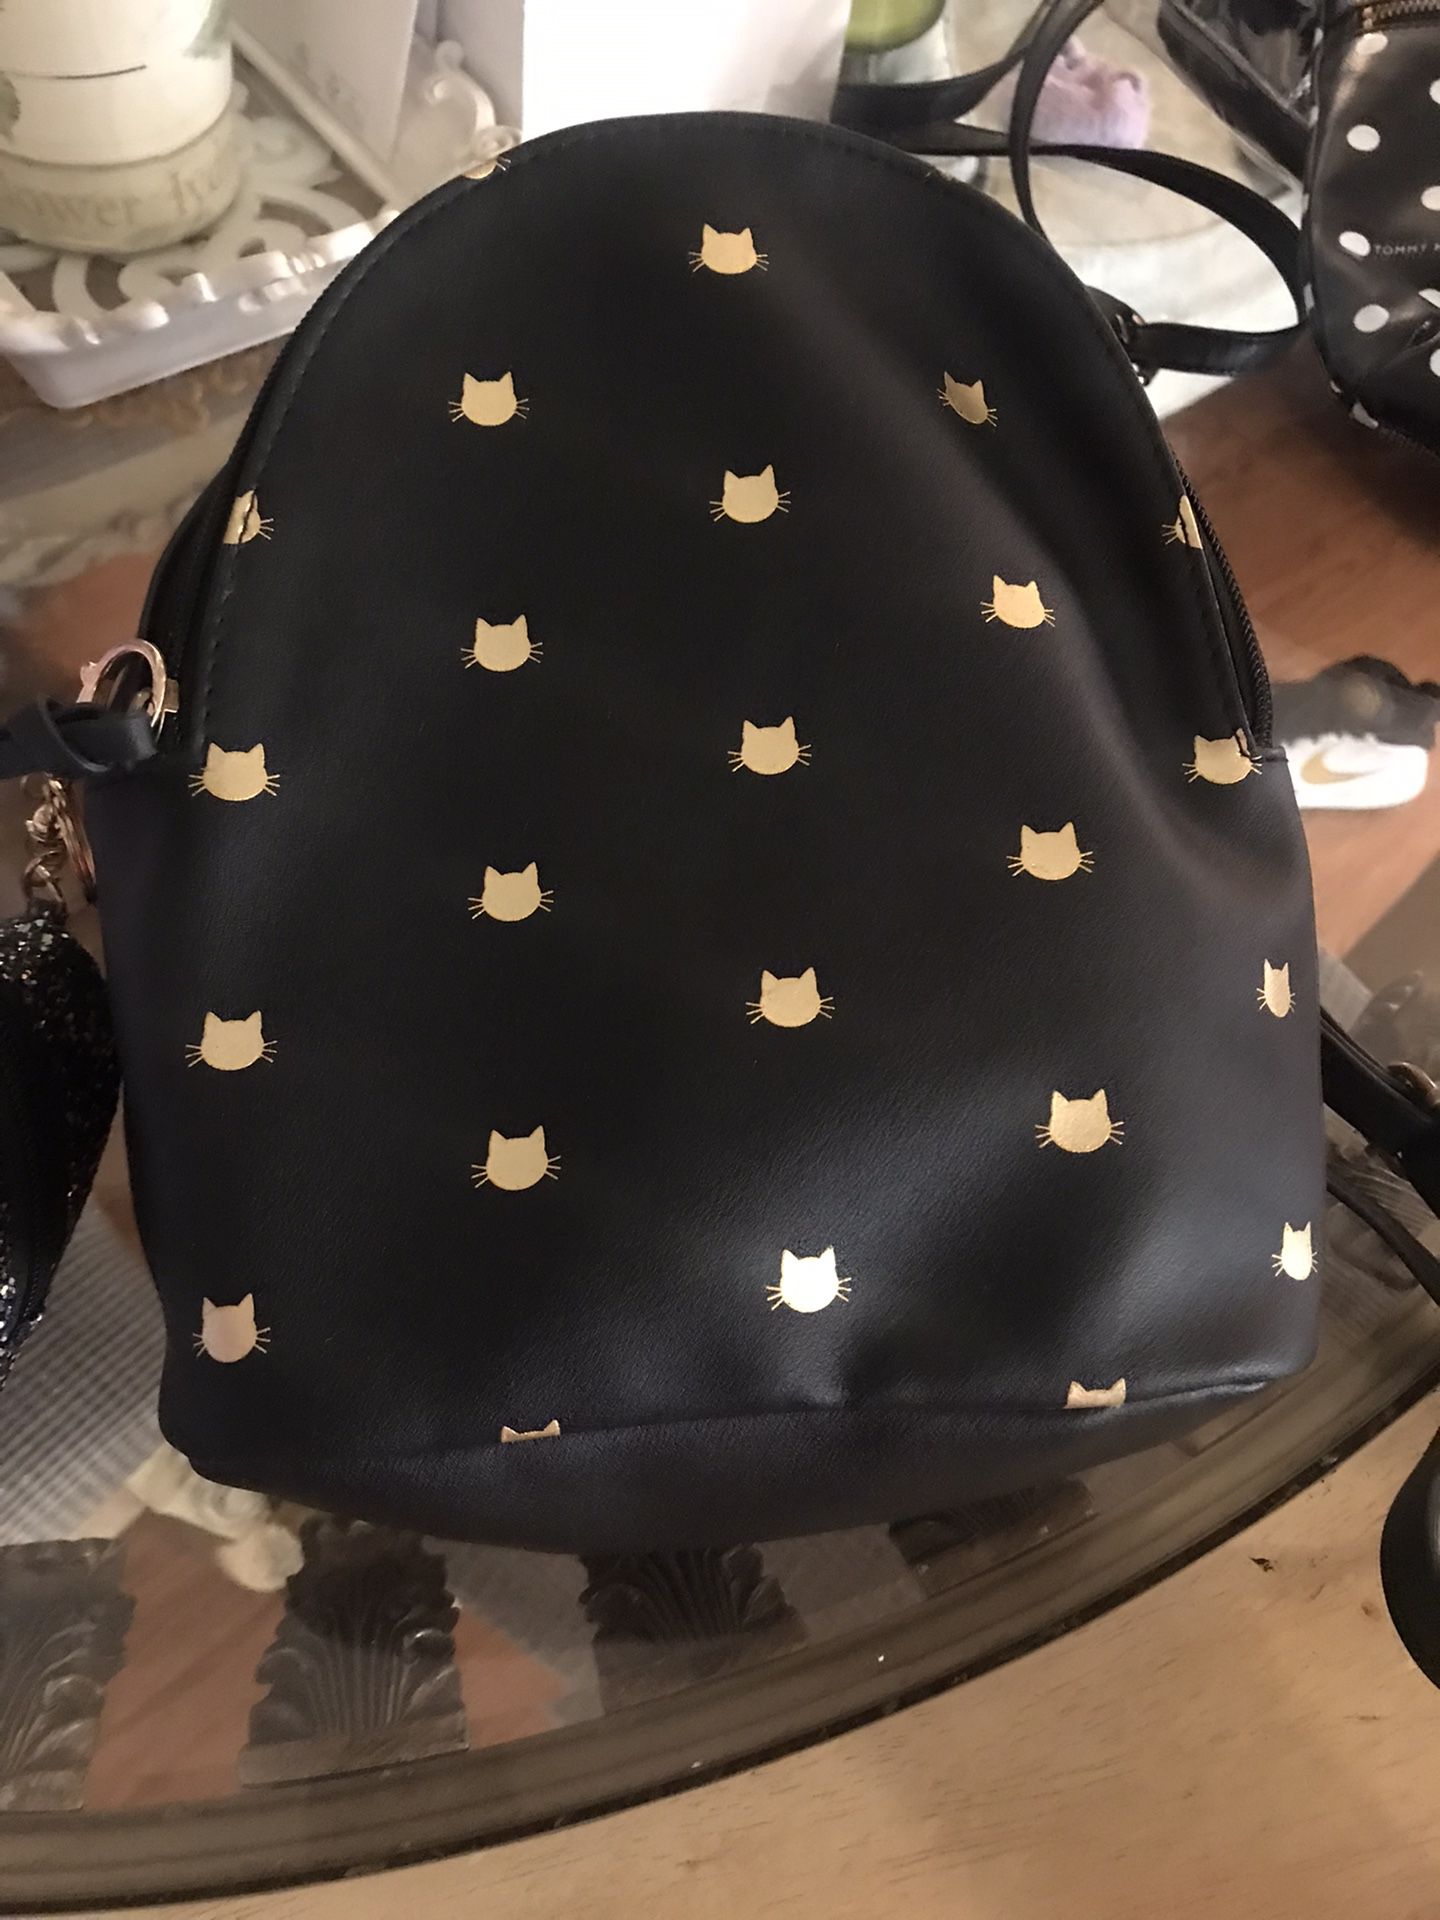 Under One Sky Maneki-neko Inspired Cats Mini Backpack Black, Red, White.  NWOT for Sale in Seattle, WA - OfferUp